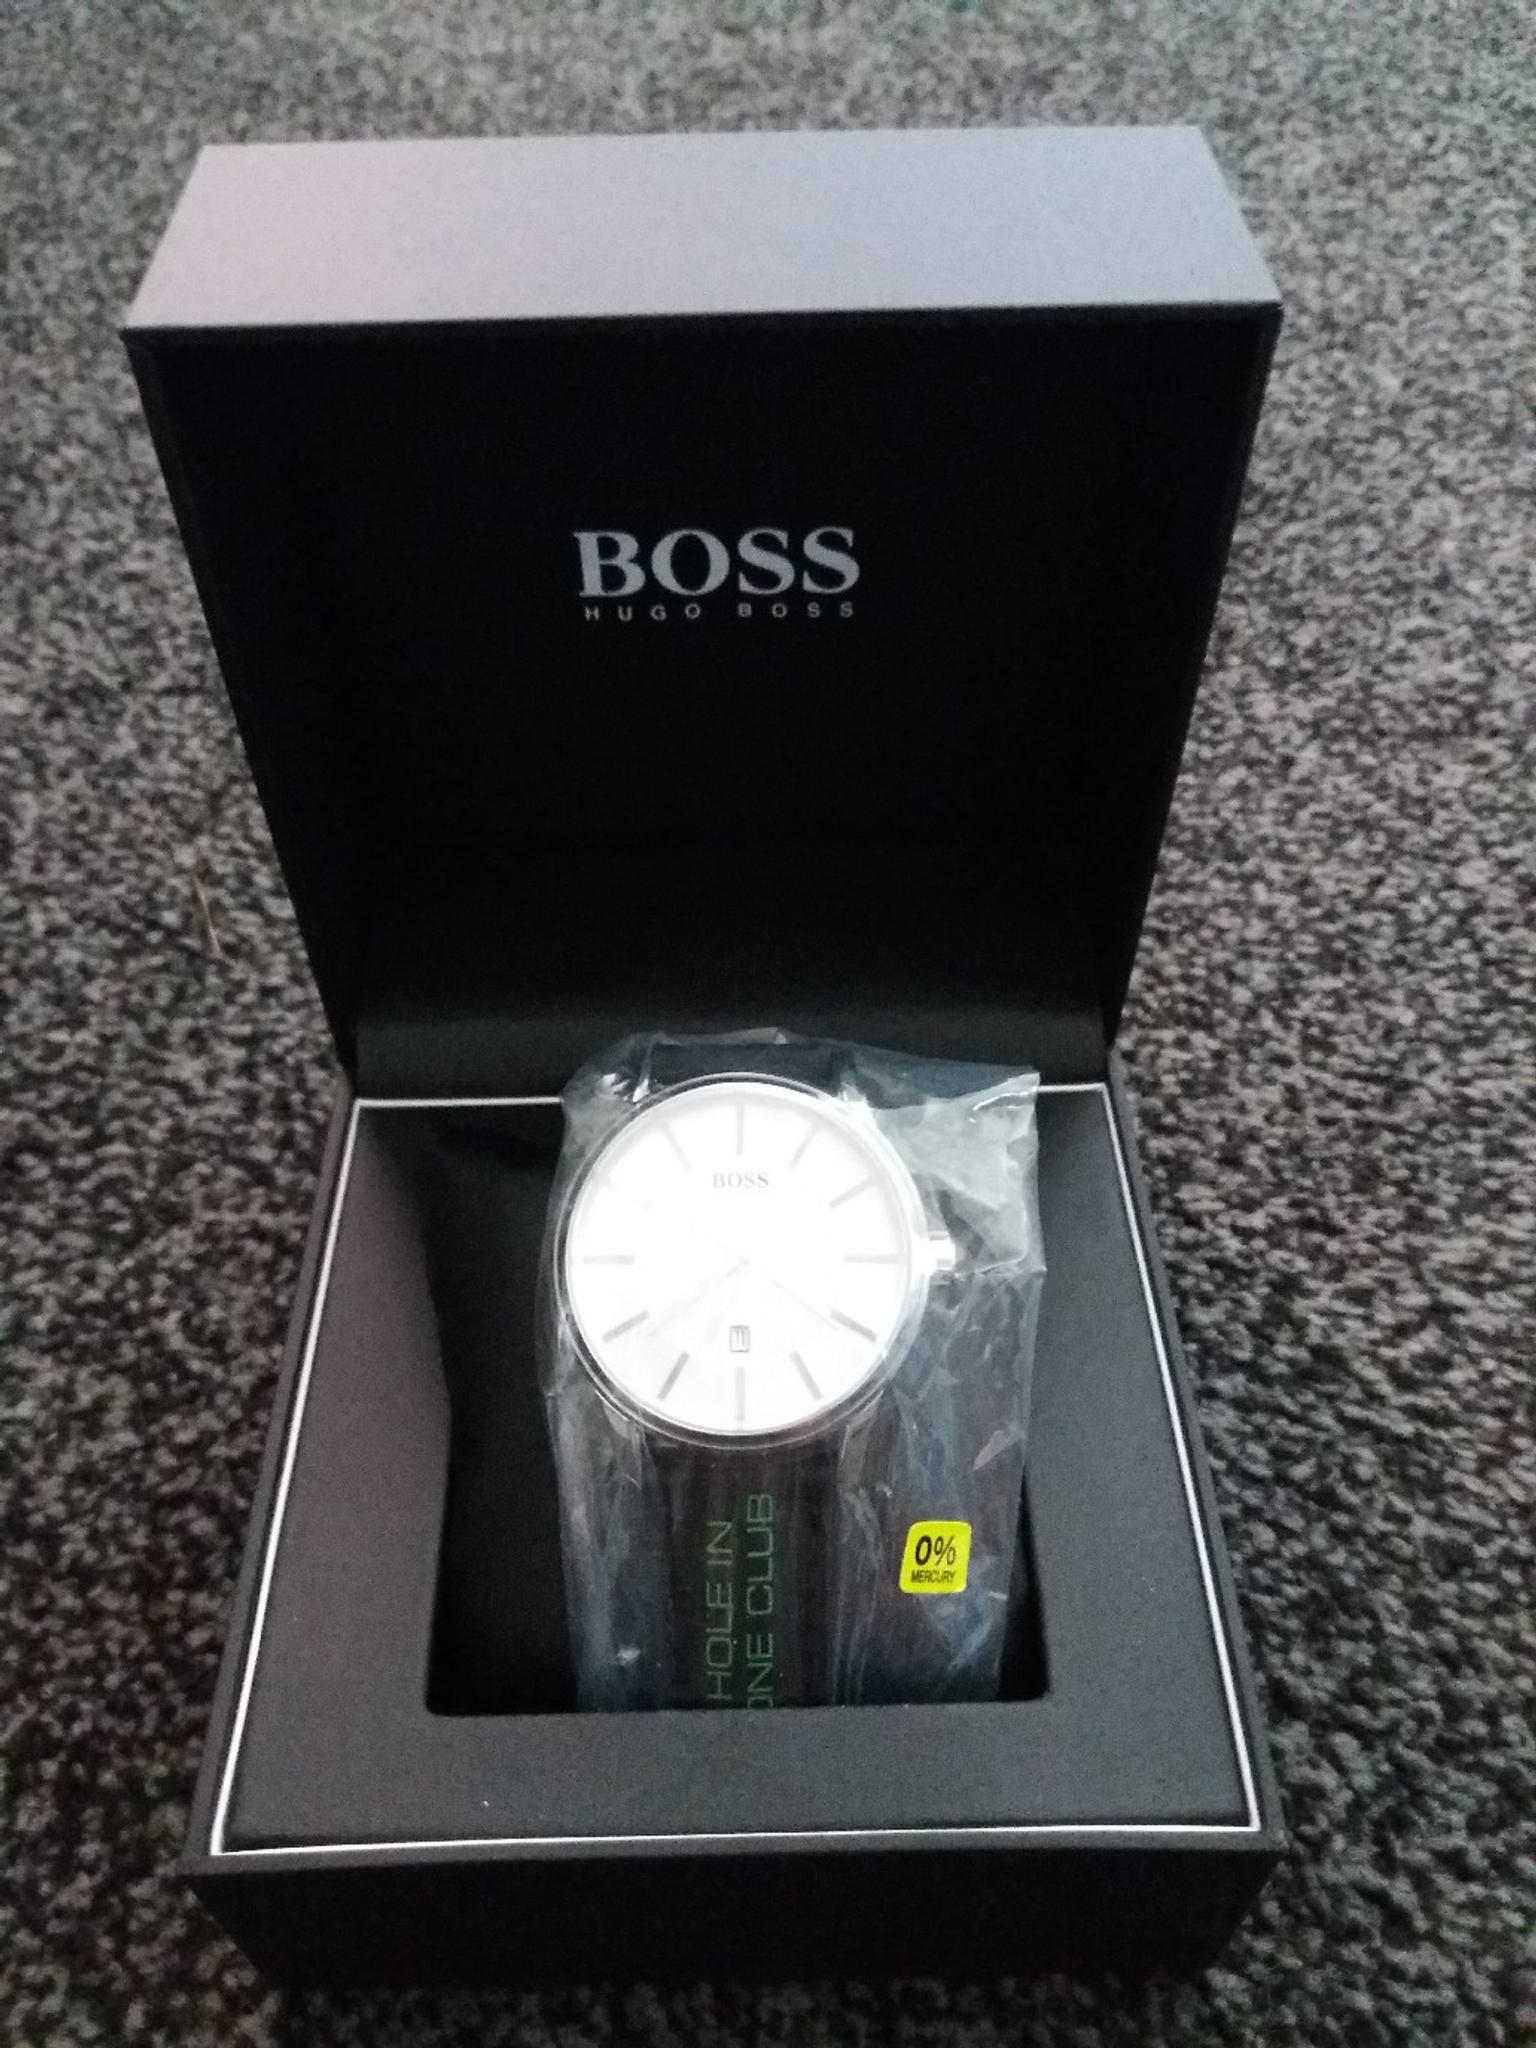 hugo boss hole in one watch instructions